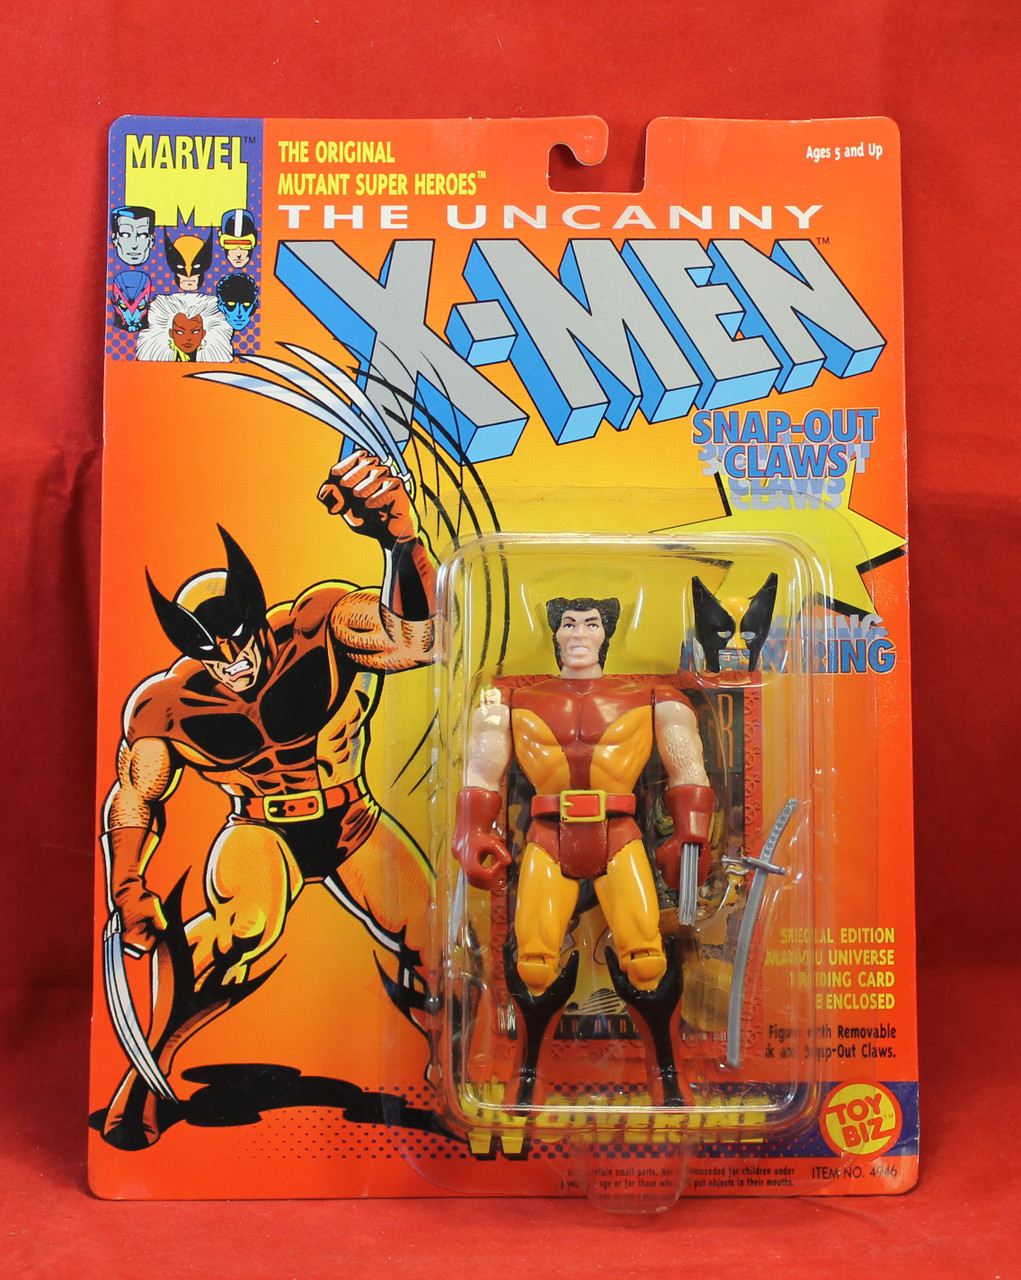 Uncanny X-Men - Action Figure - Wolverine Snap-out Claws